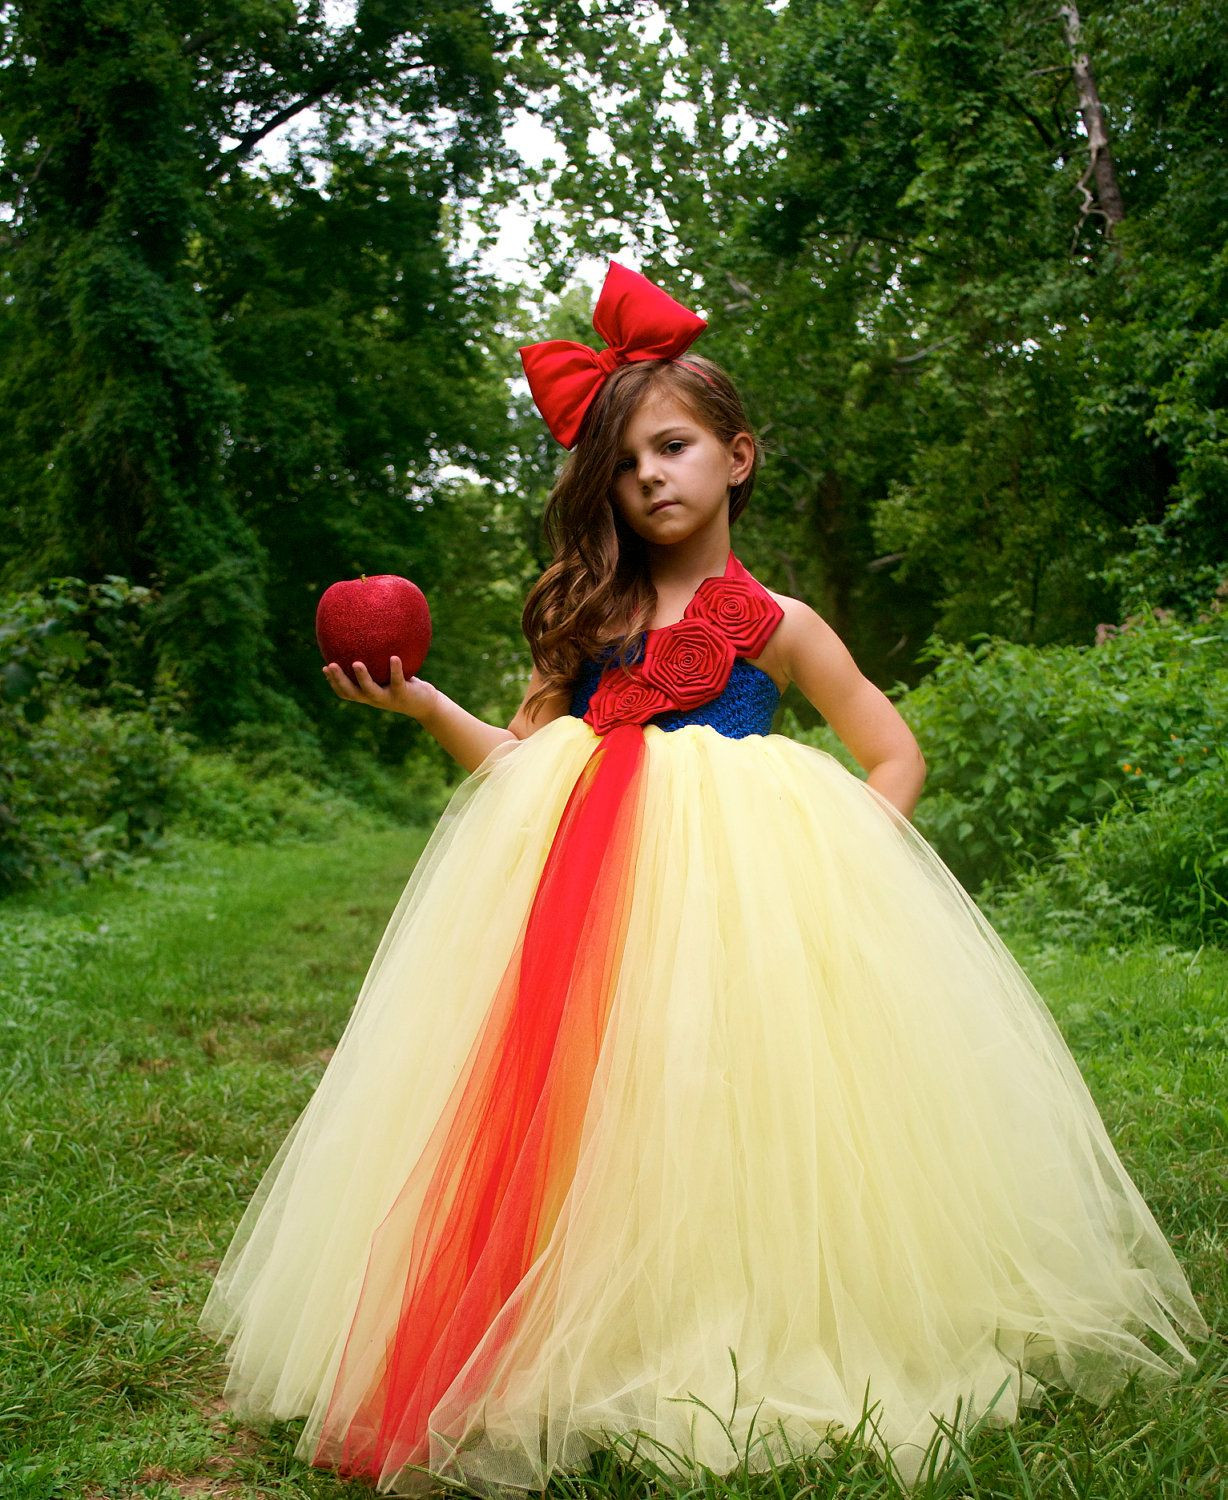 Snow White Costumes DIY
 The 25 best Snow white costume ideas on Pinterest